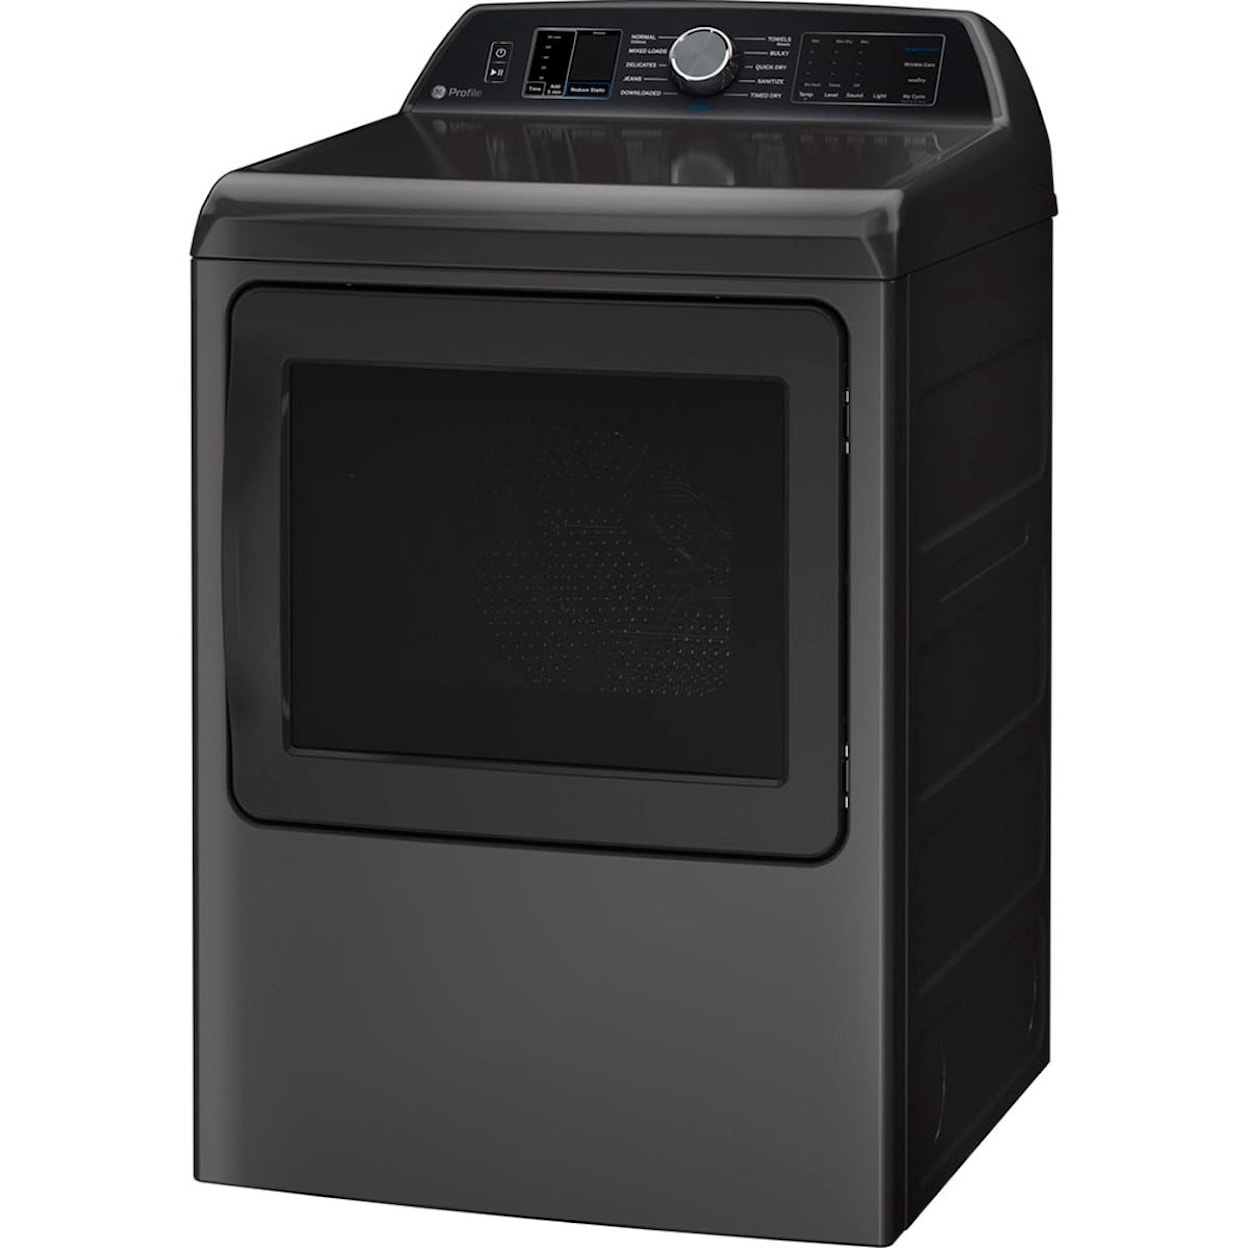 GE Appliances Dryers Smart Electric Dryer